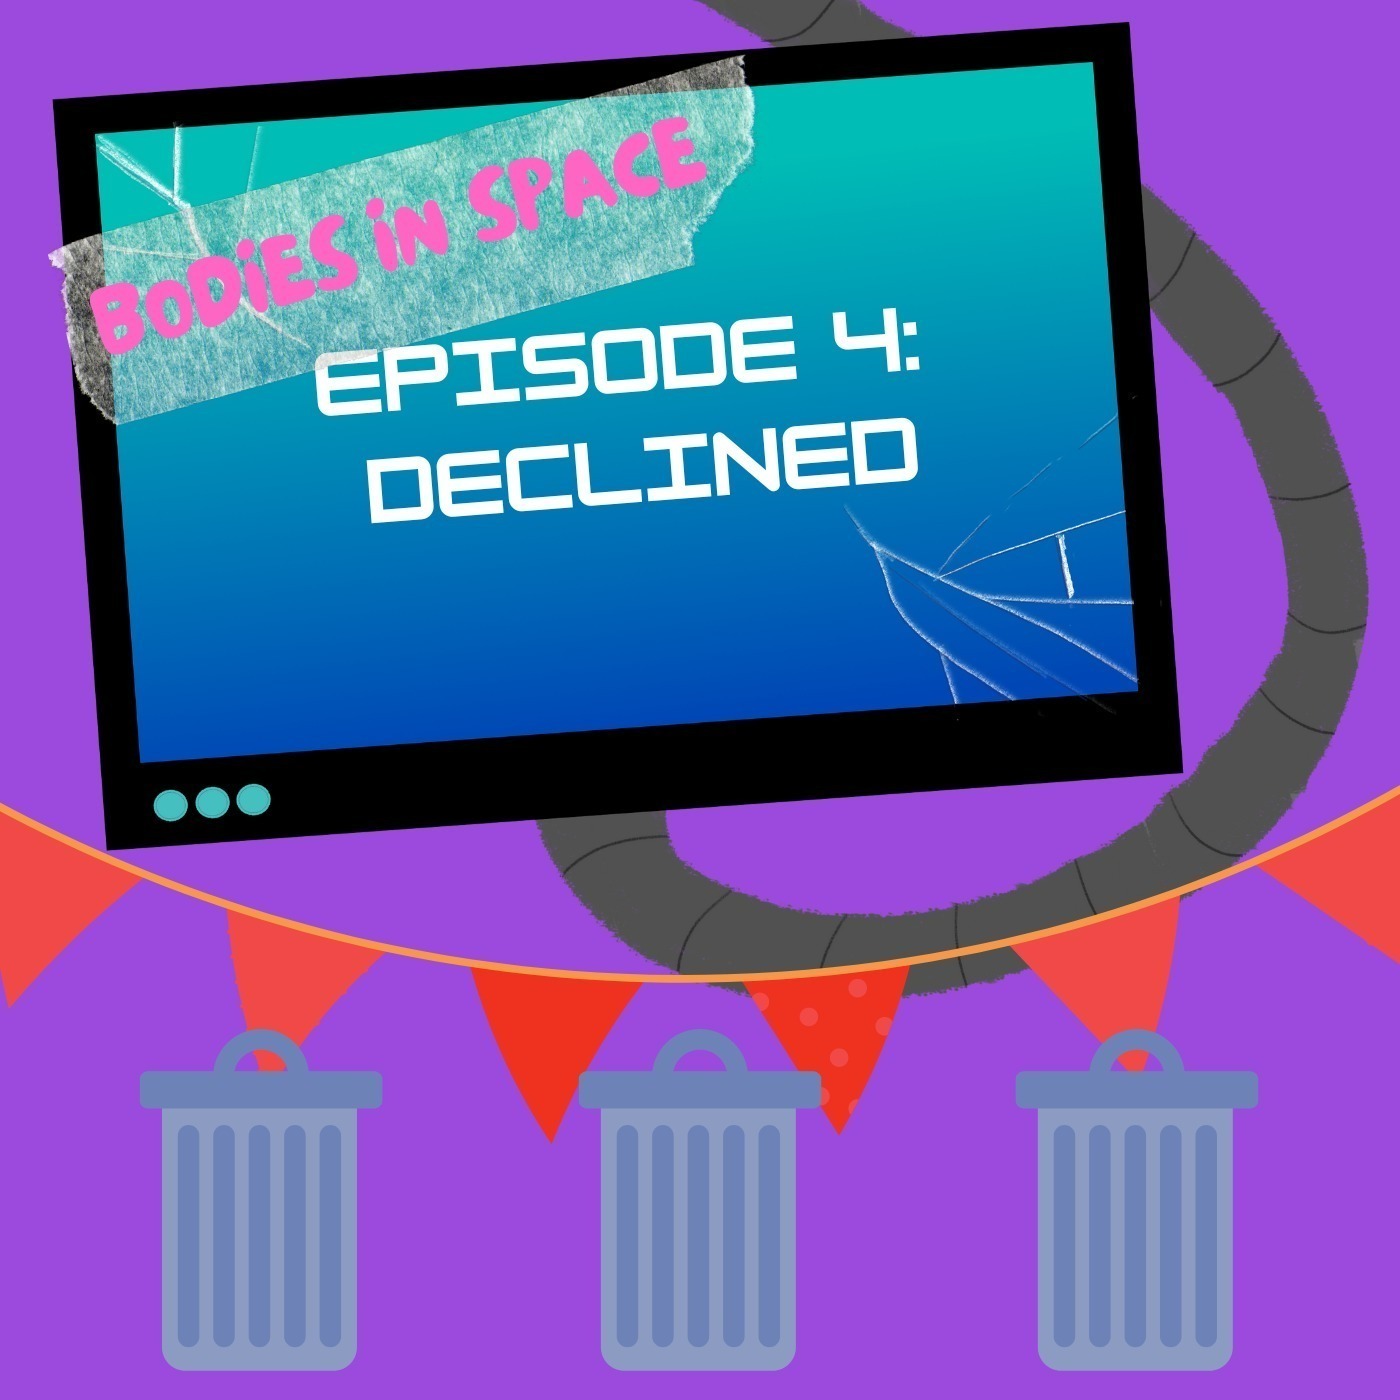 Episode 4: Declined